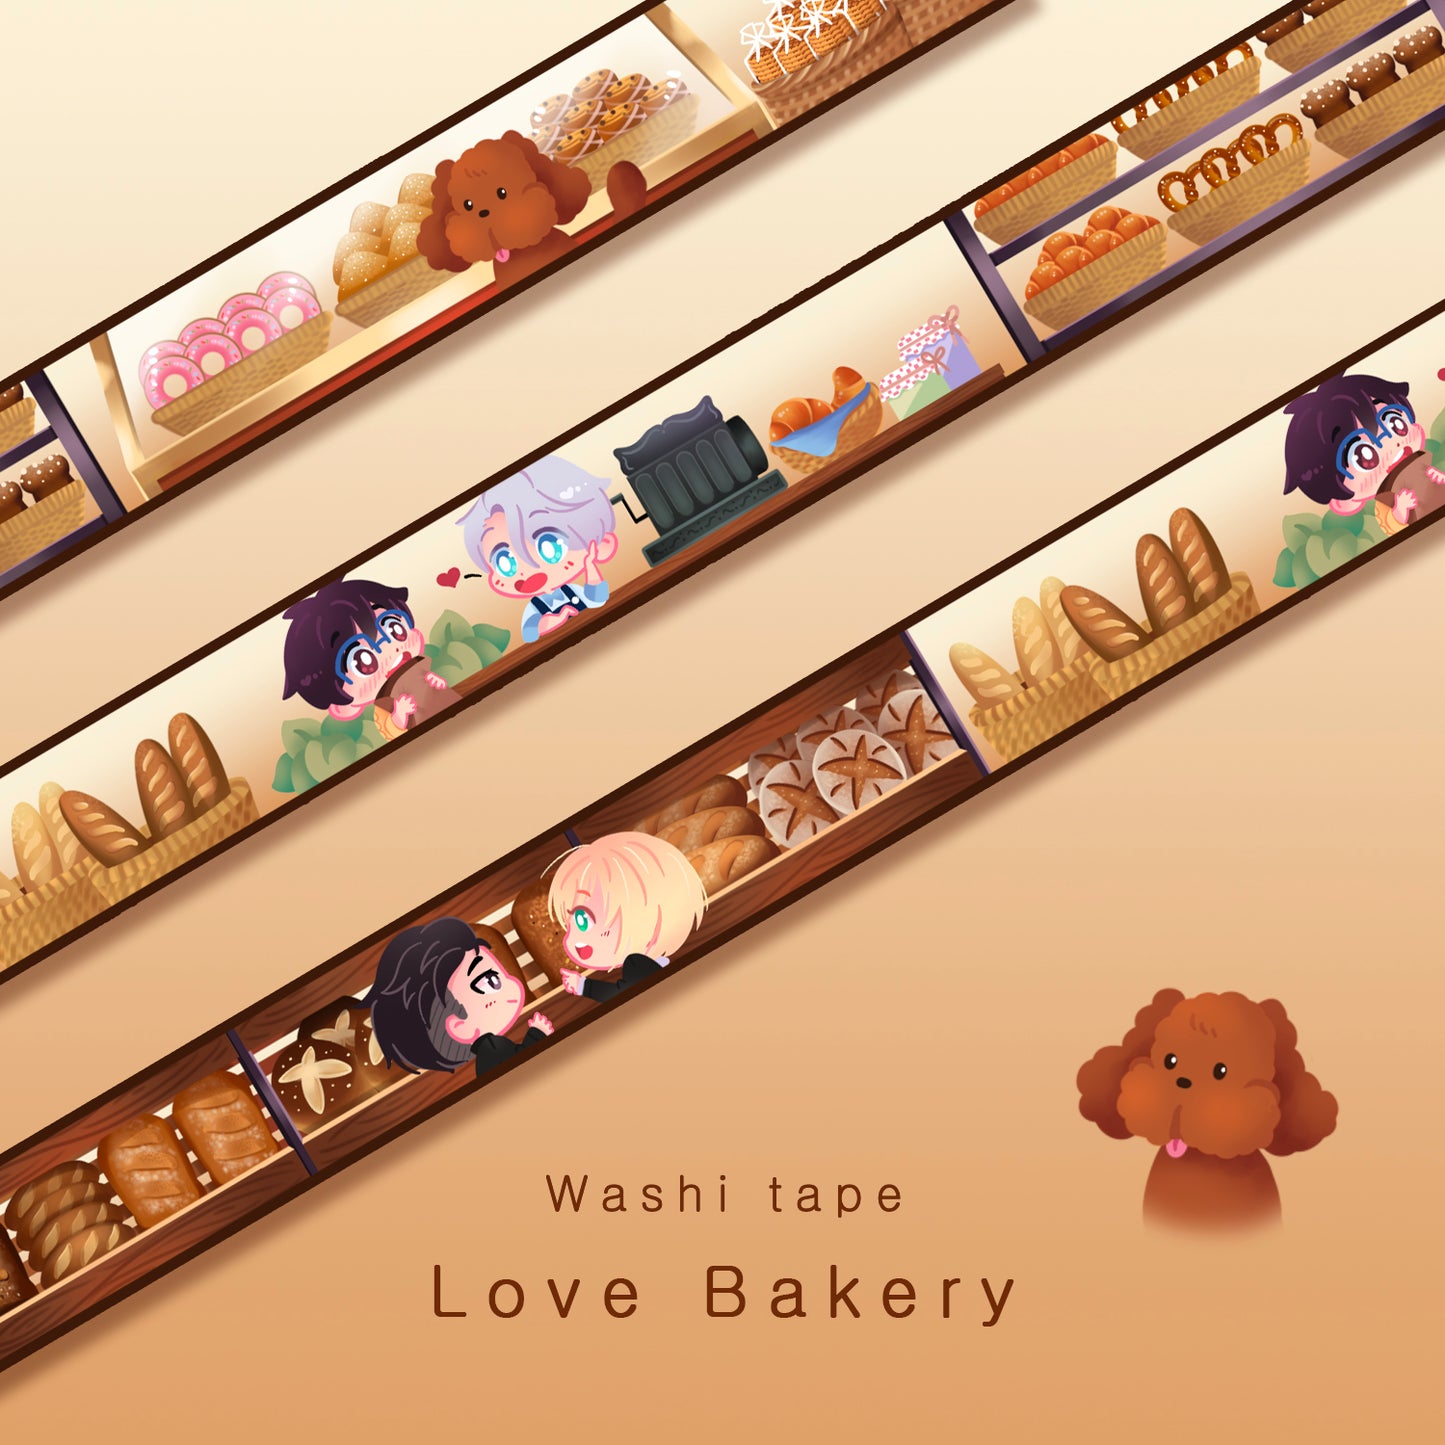 [Yuri!!! on Ice] Love Bakery - Washi tape